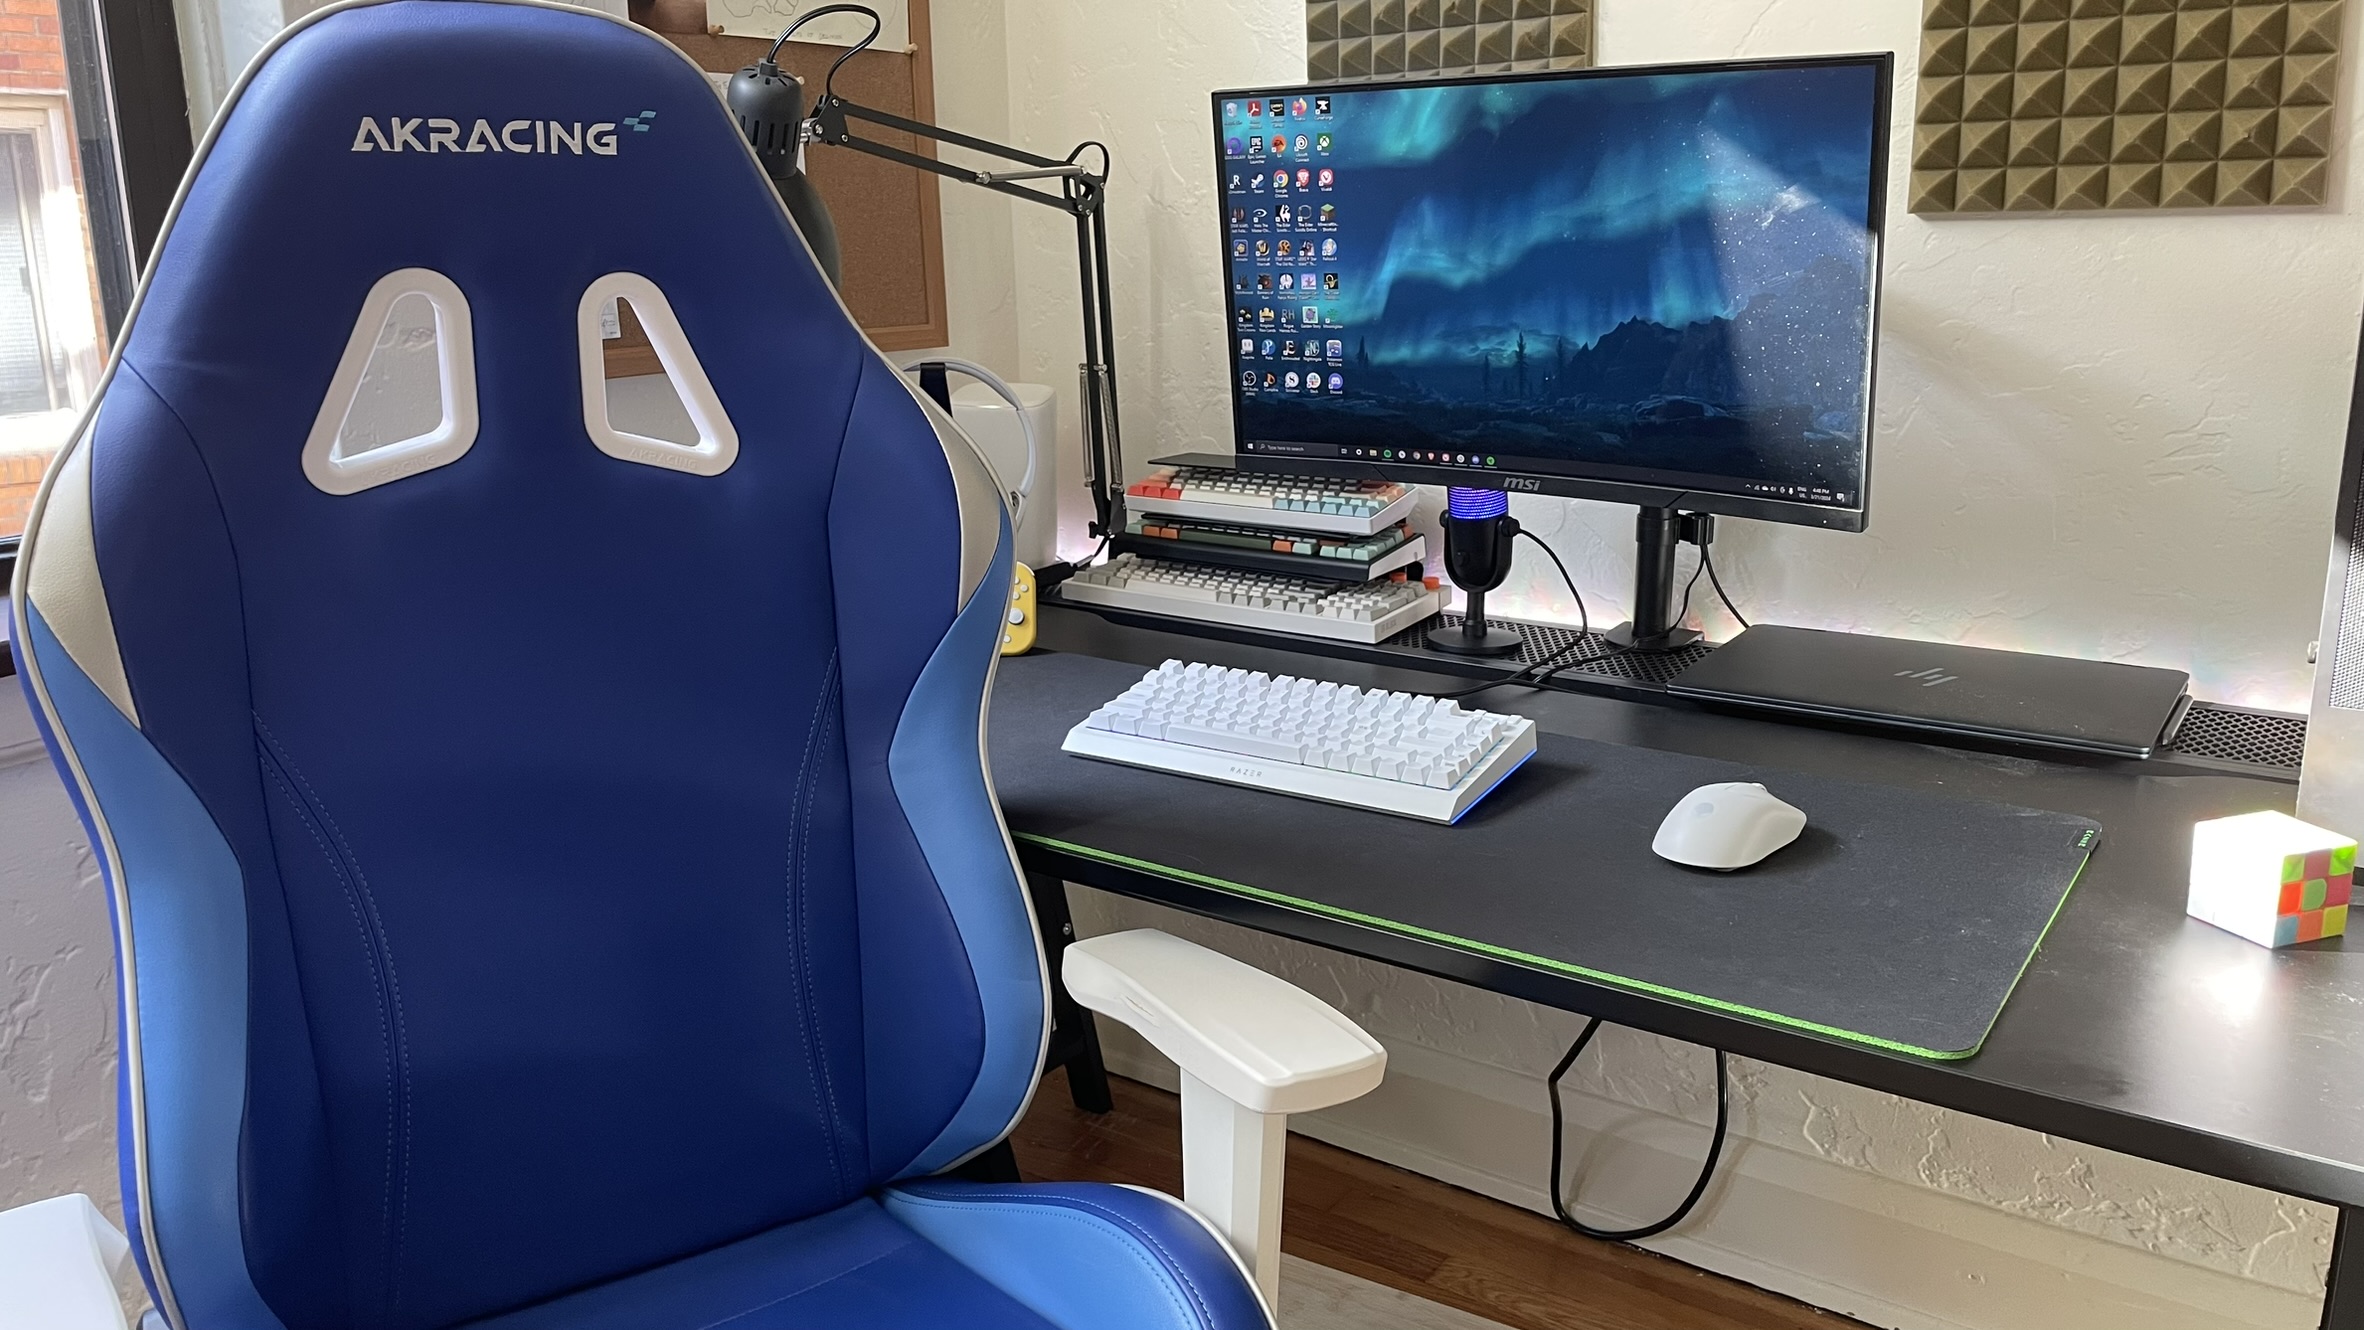 The AKRacing California gaming chair in Tahoe blue